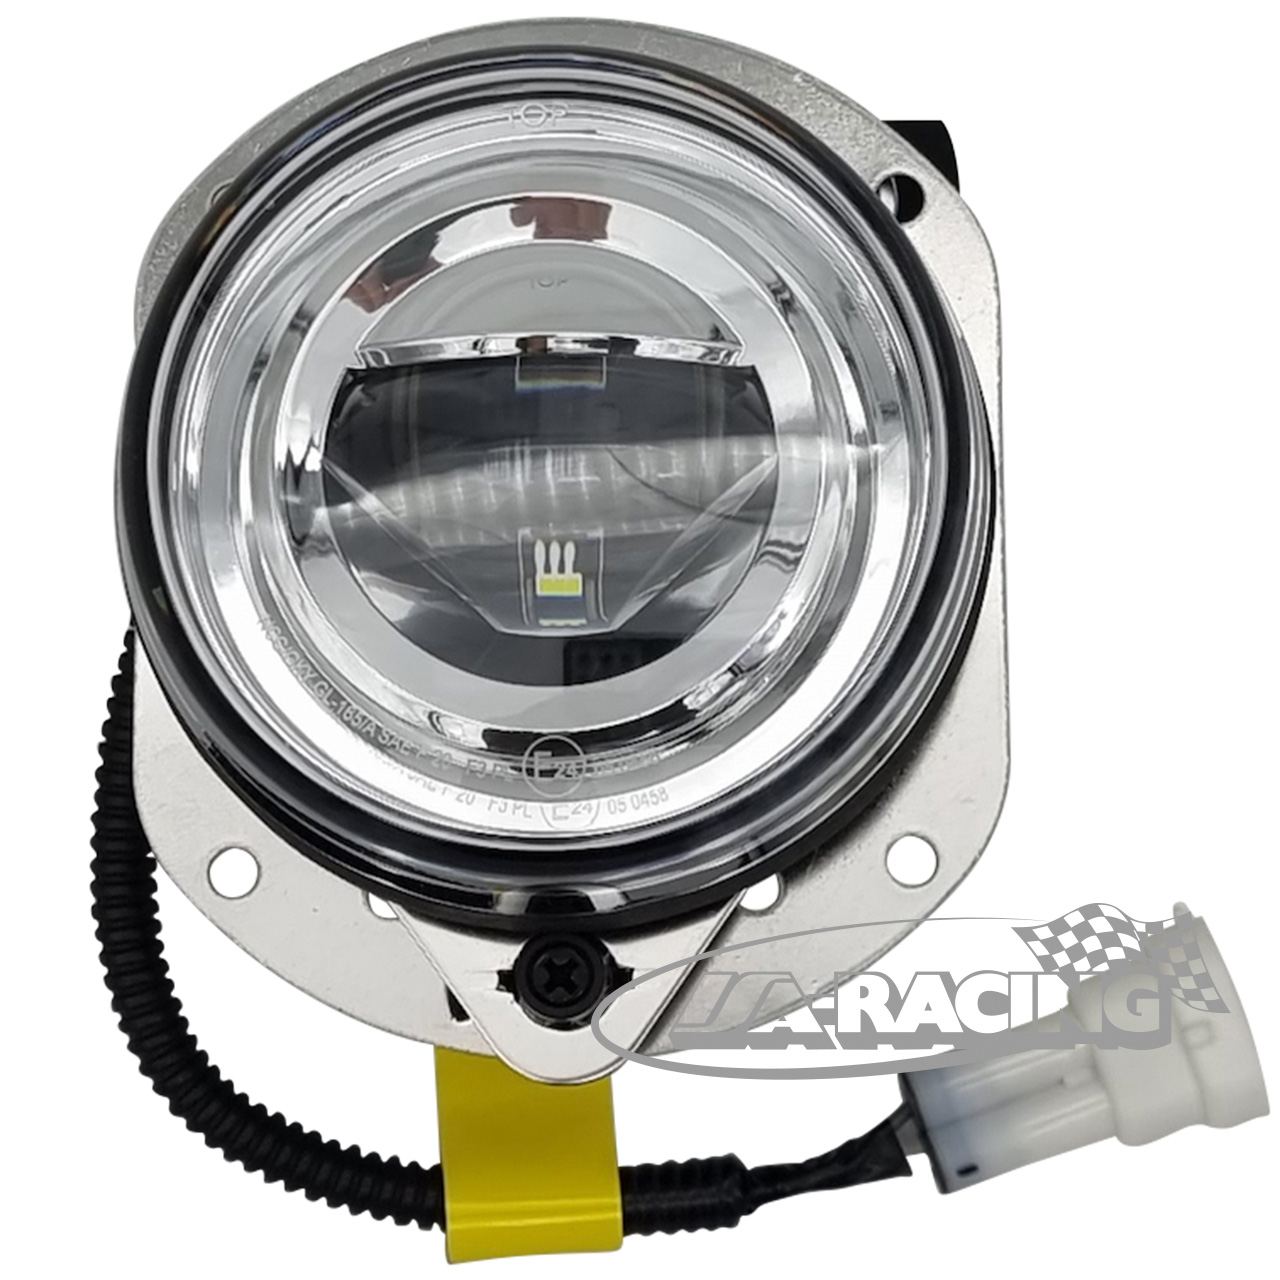 LED Nebelscheinwerfer 90 mm NCC®, LED Scheinwerfer, Zusatzscheinwerfer, Elektrozubehör, Elektrik/Elektronik